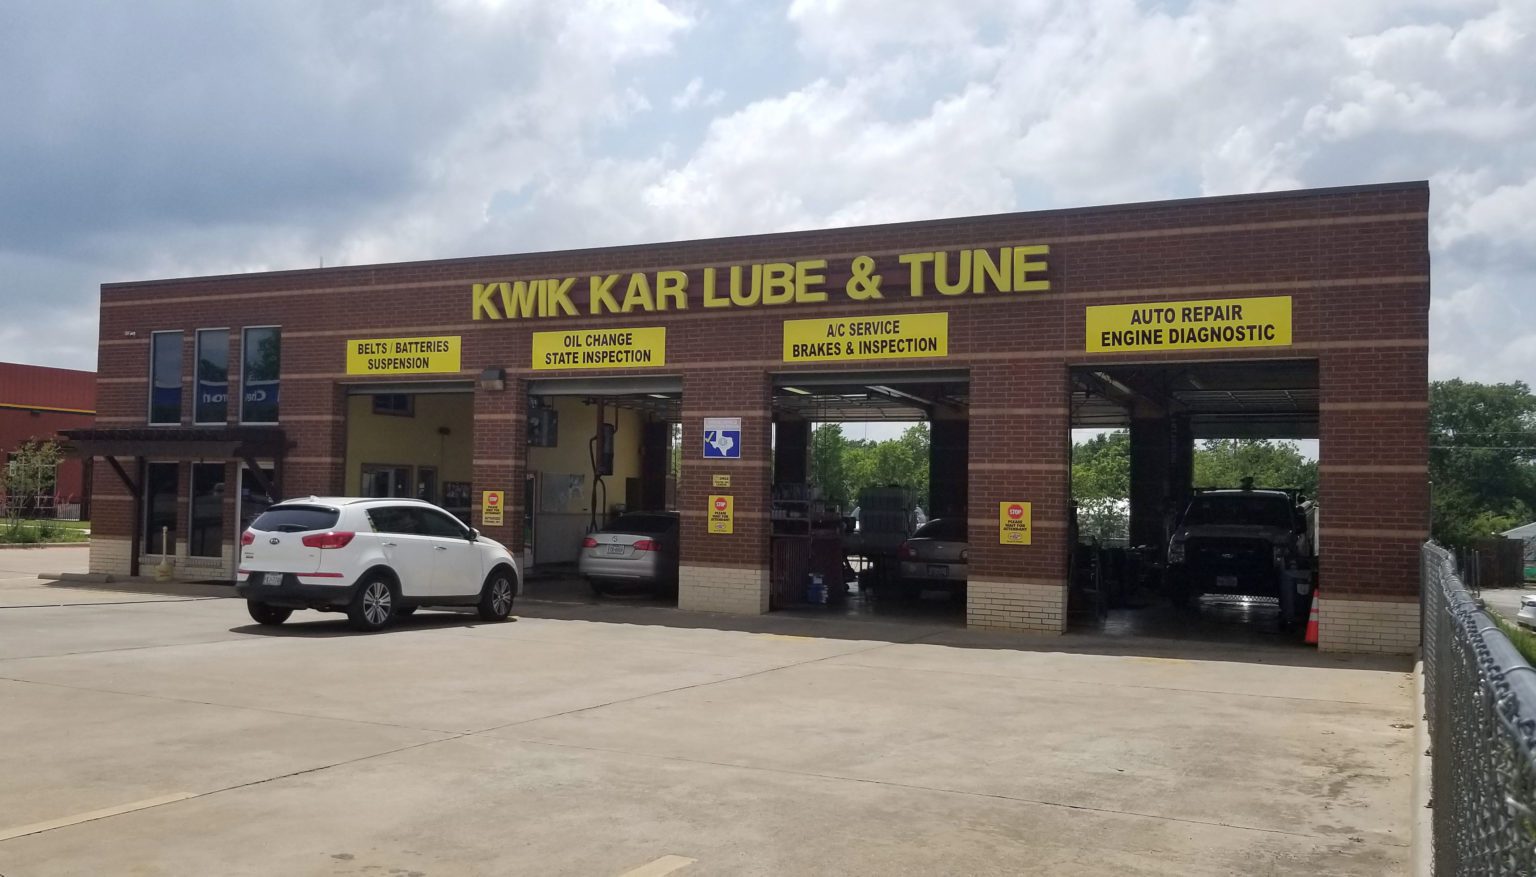 Kwik Kar Lube & Tune in Ft Worth